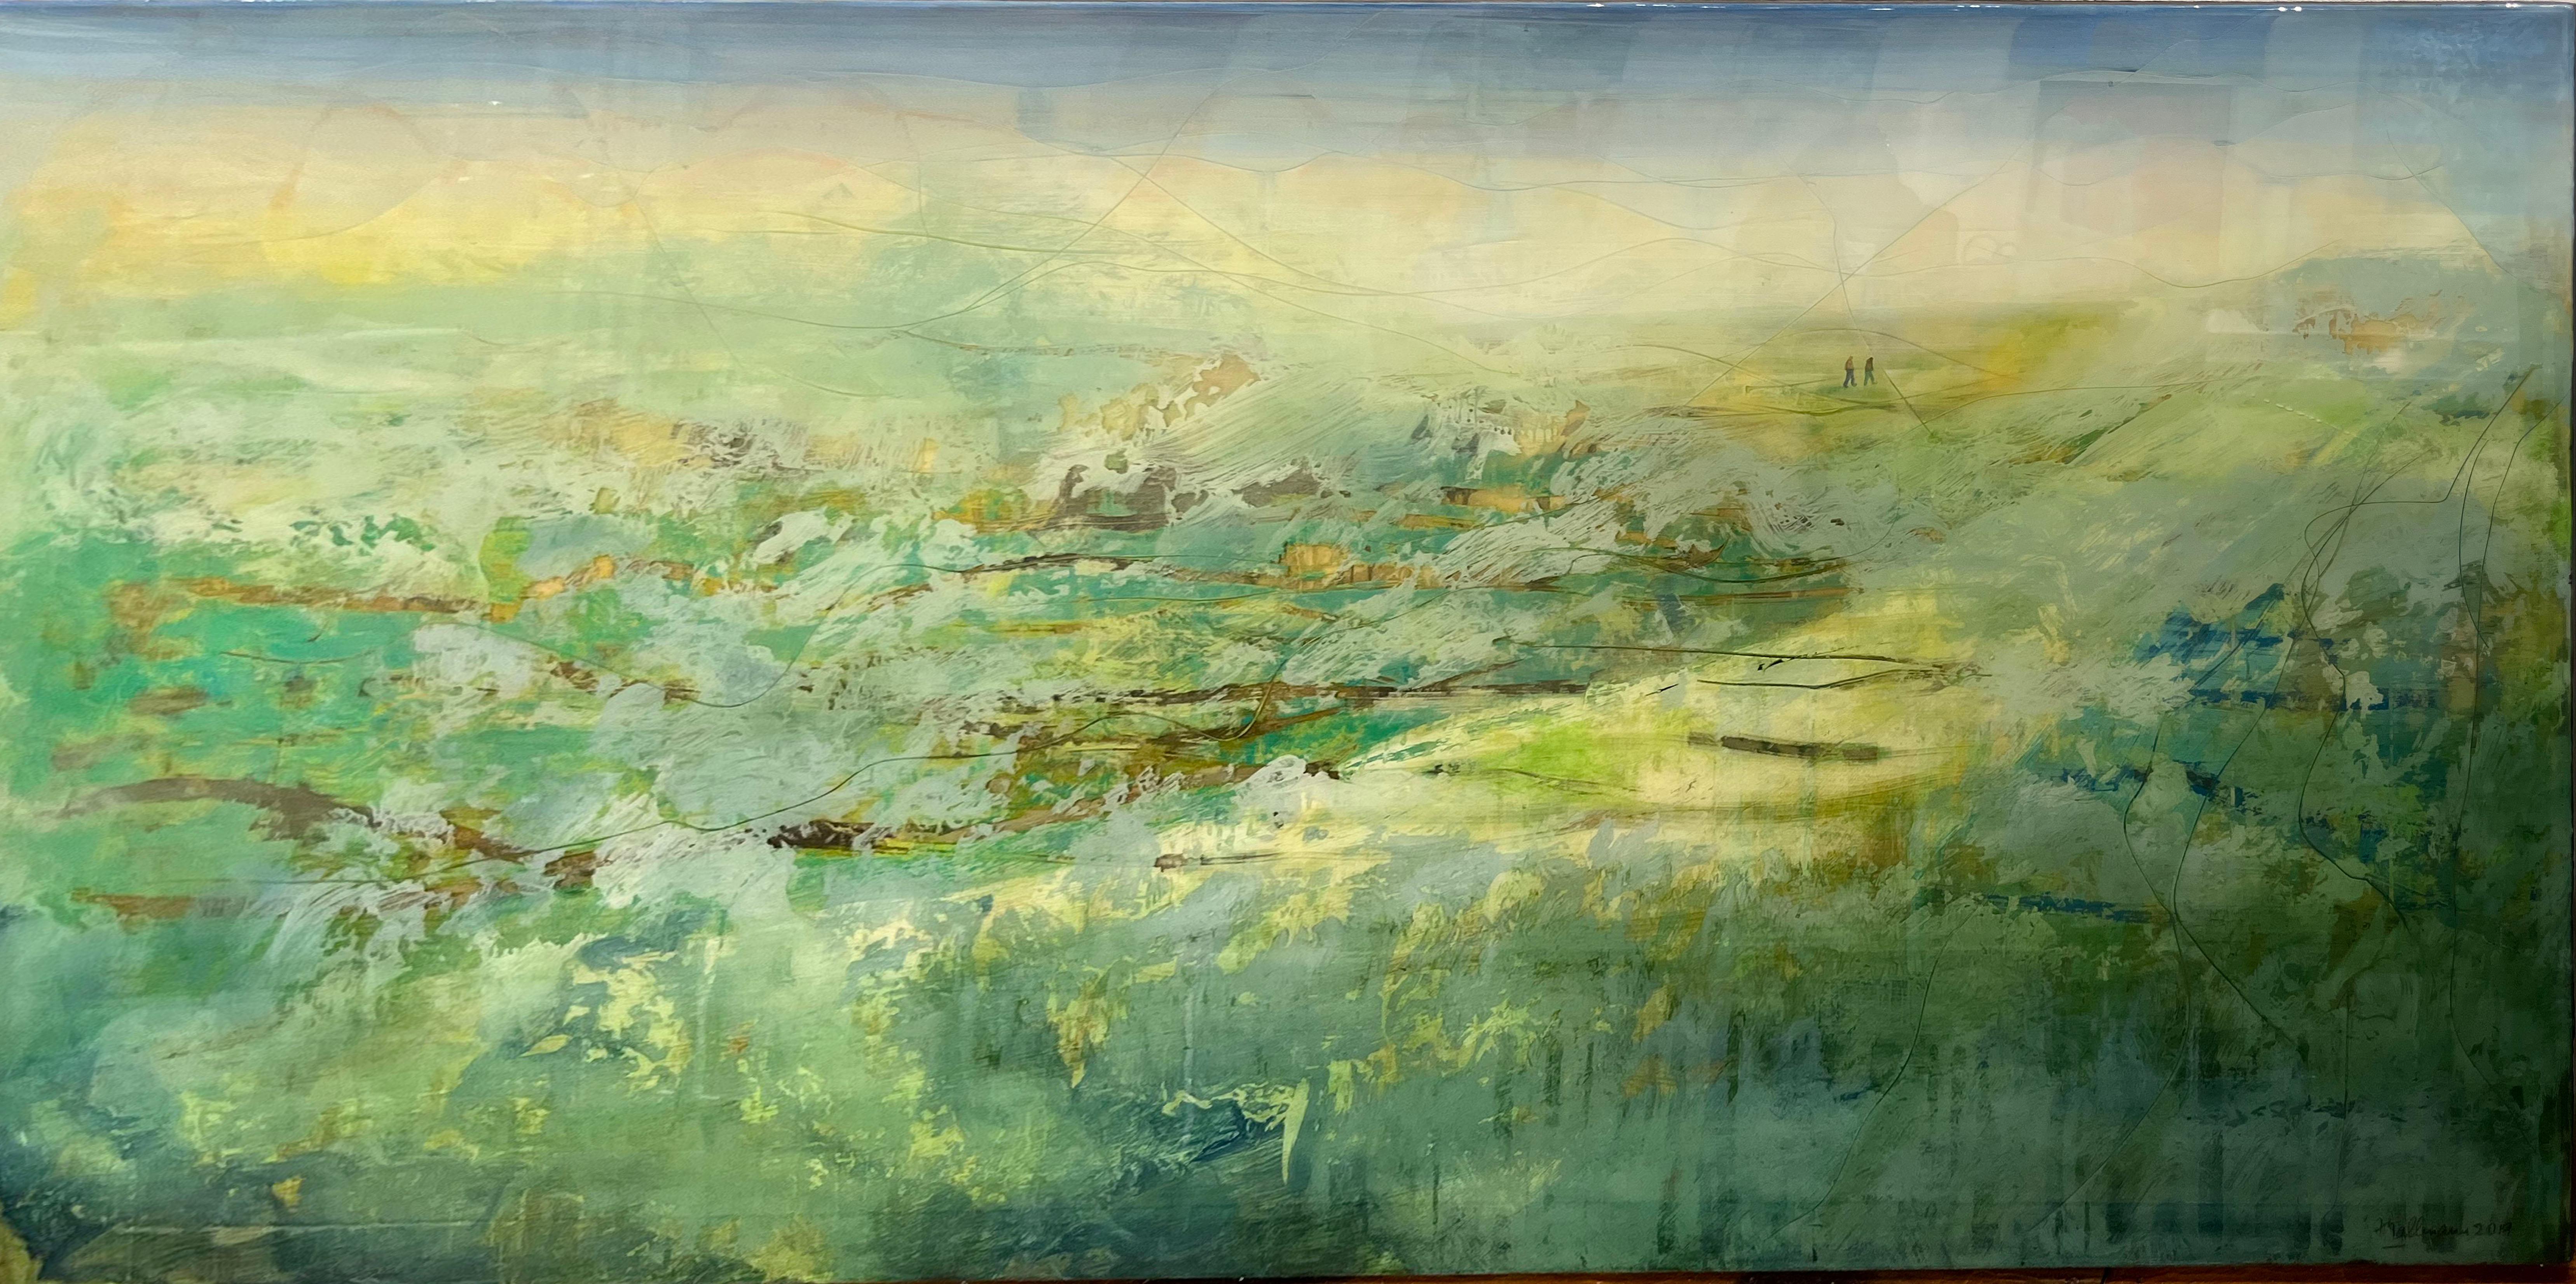 Abstract Painting Arturo Mallmann - LANDES DE FARAWAY